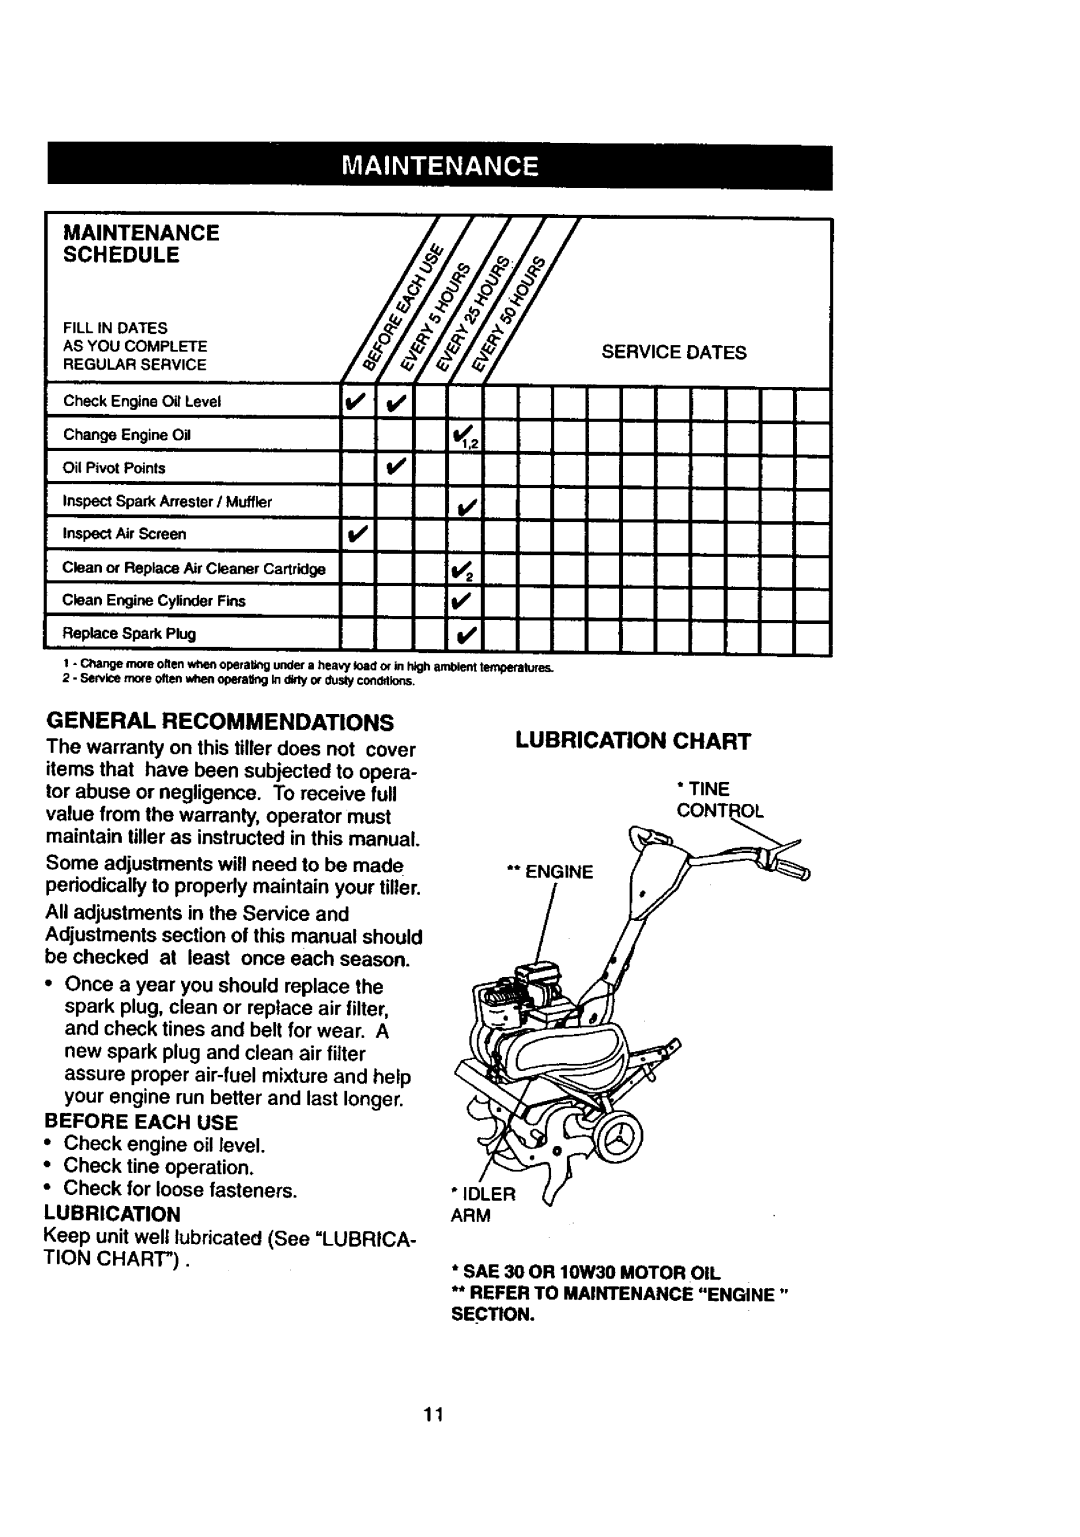 Craftsman 917.29239 owner manual Matenancschedule, Lubrication Chart 